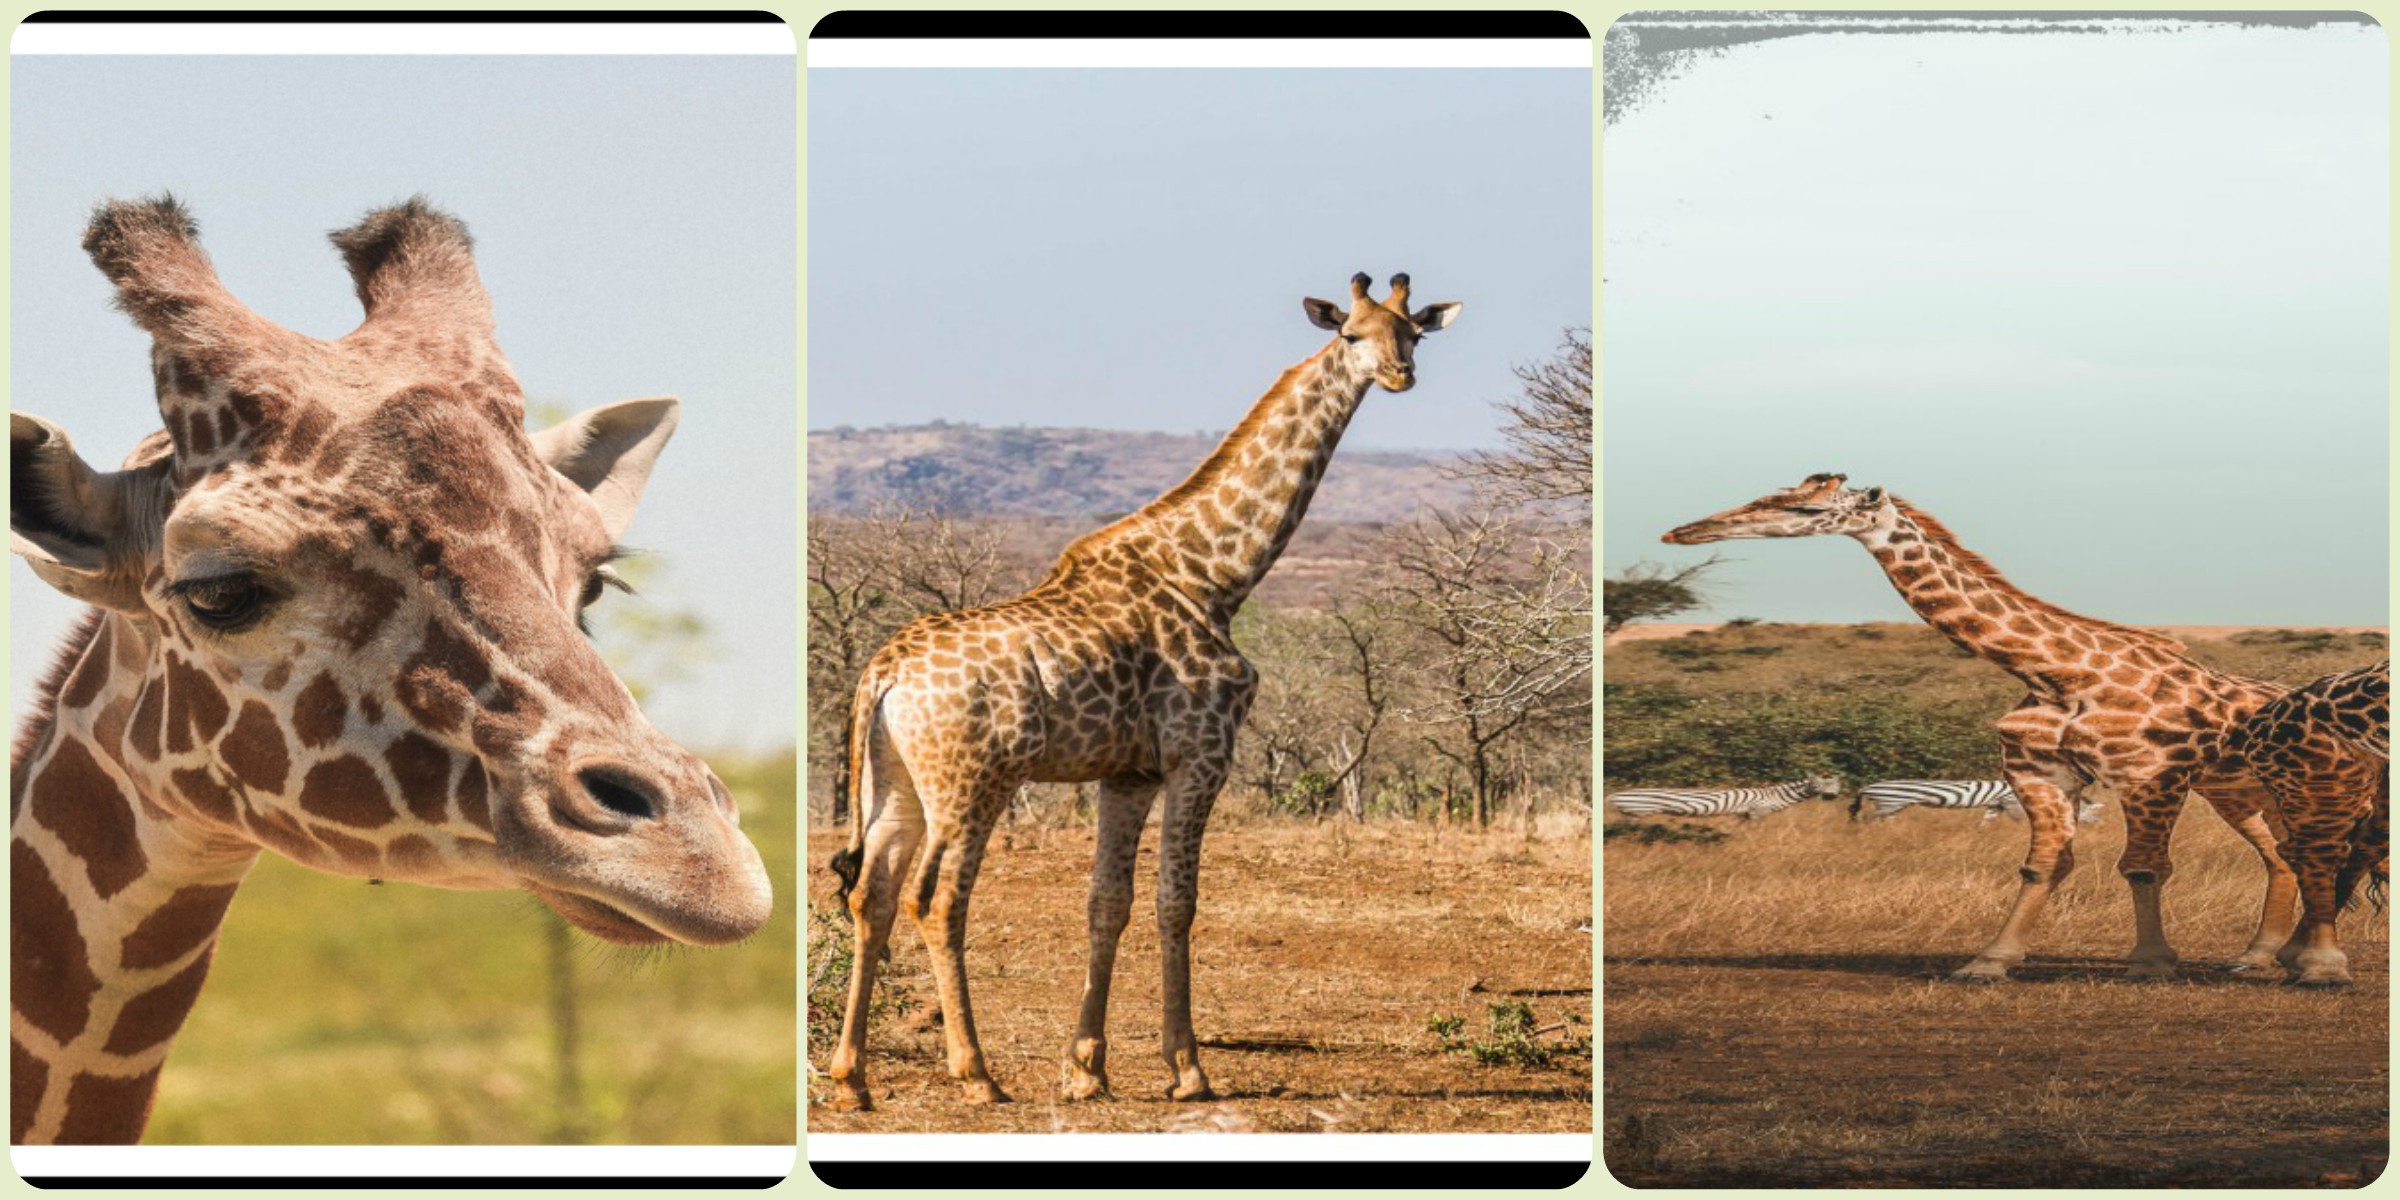 Giraffe : The Tallest Animal In The World